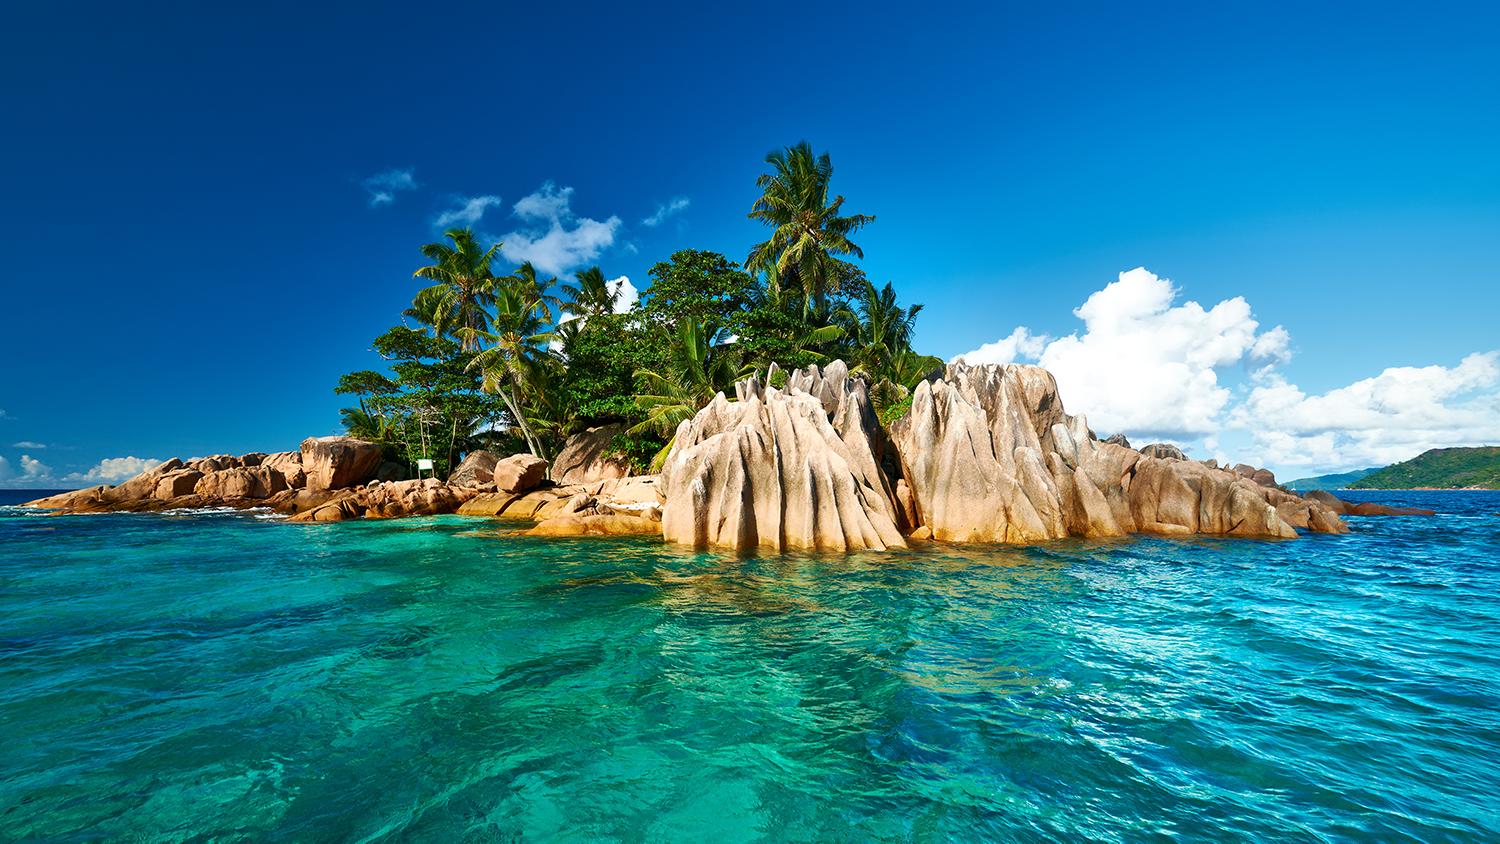 Indian Ocean vacations